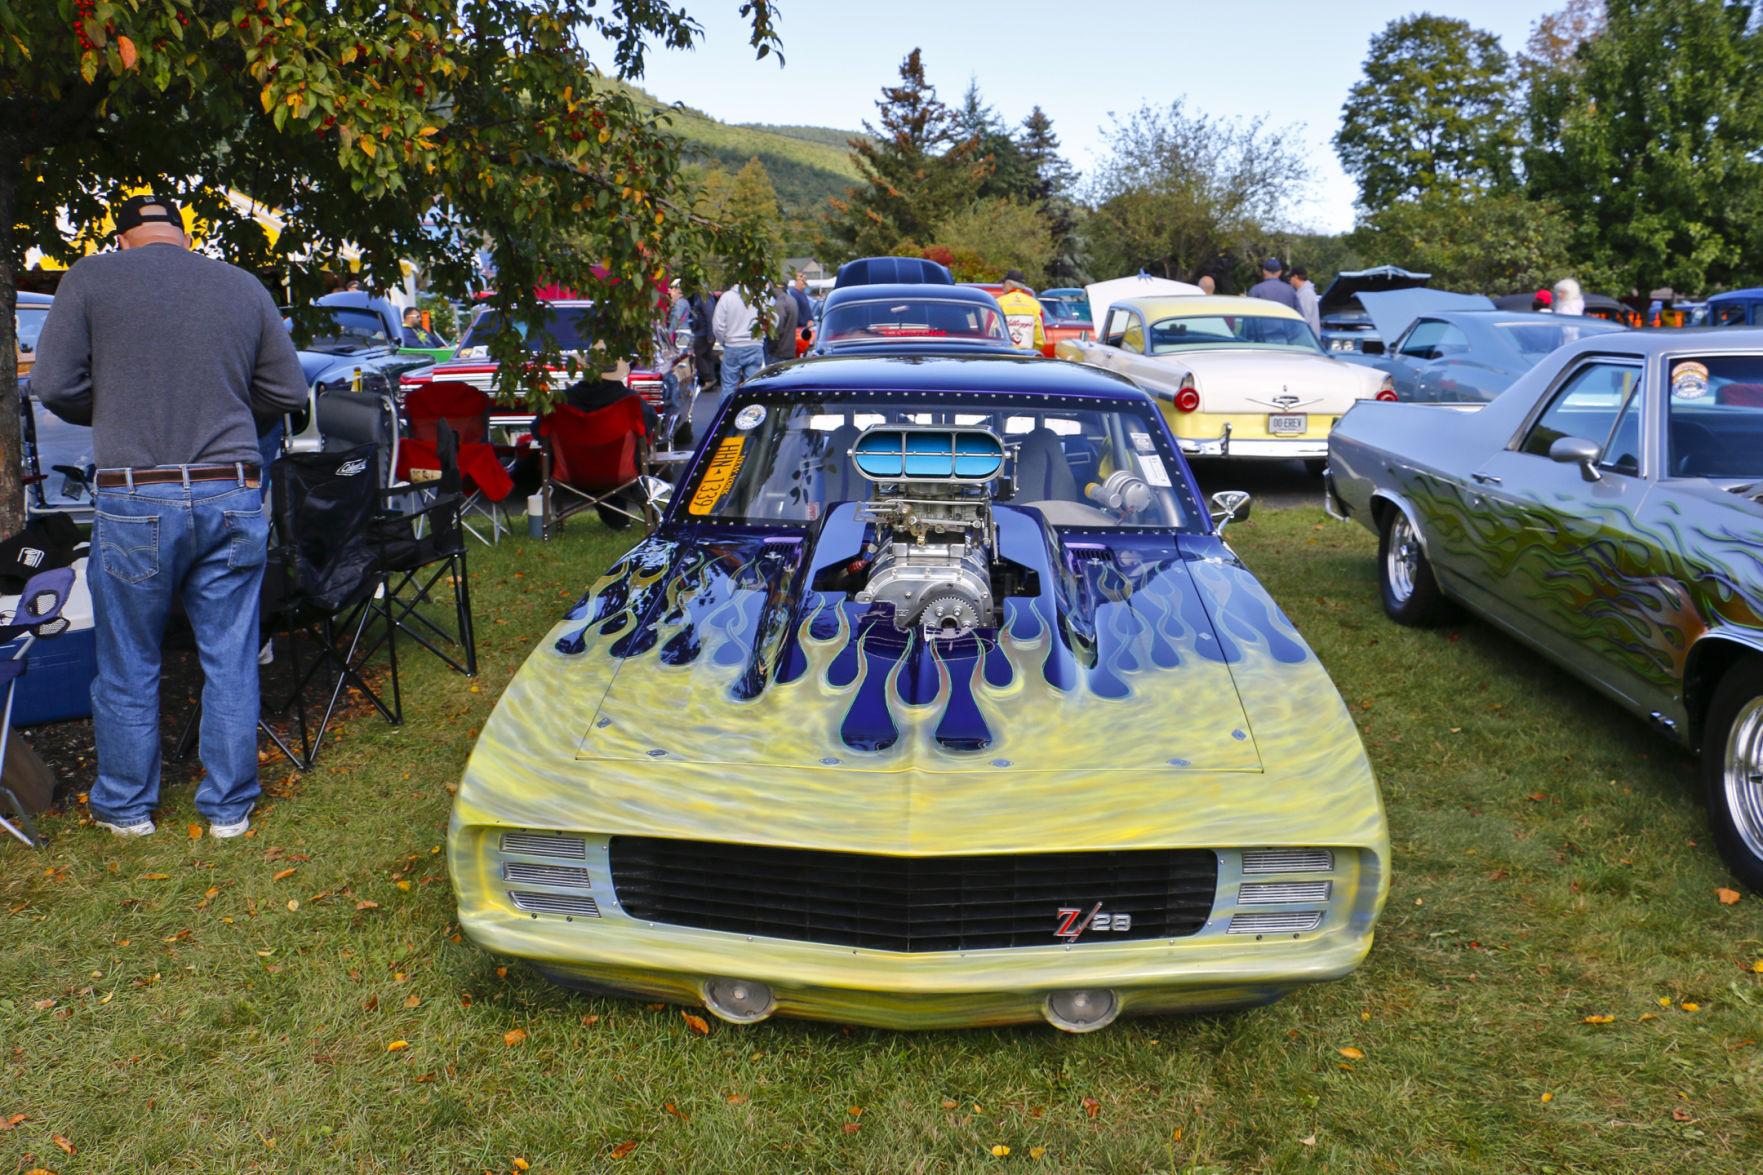 PHOTO GALLERY Adirondack Nationals Car Show